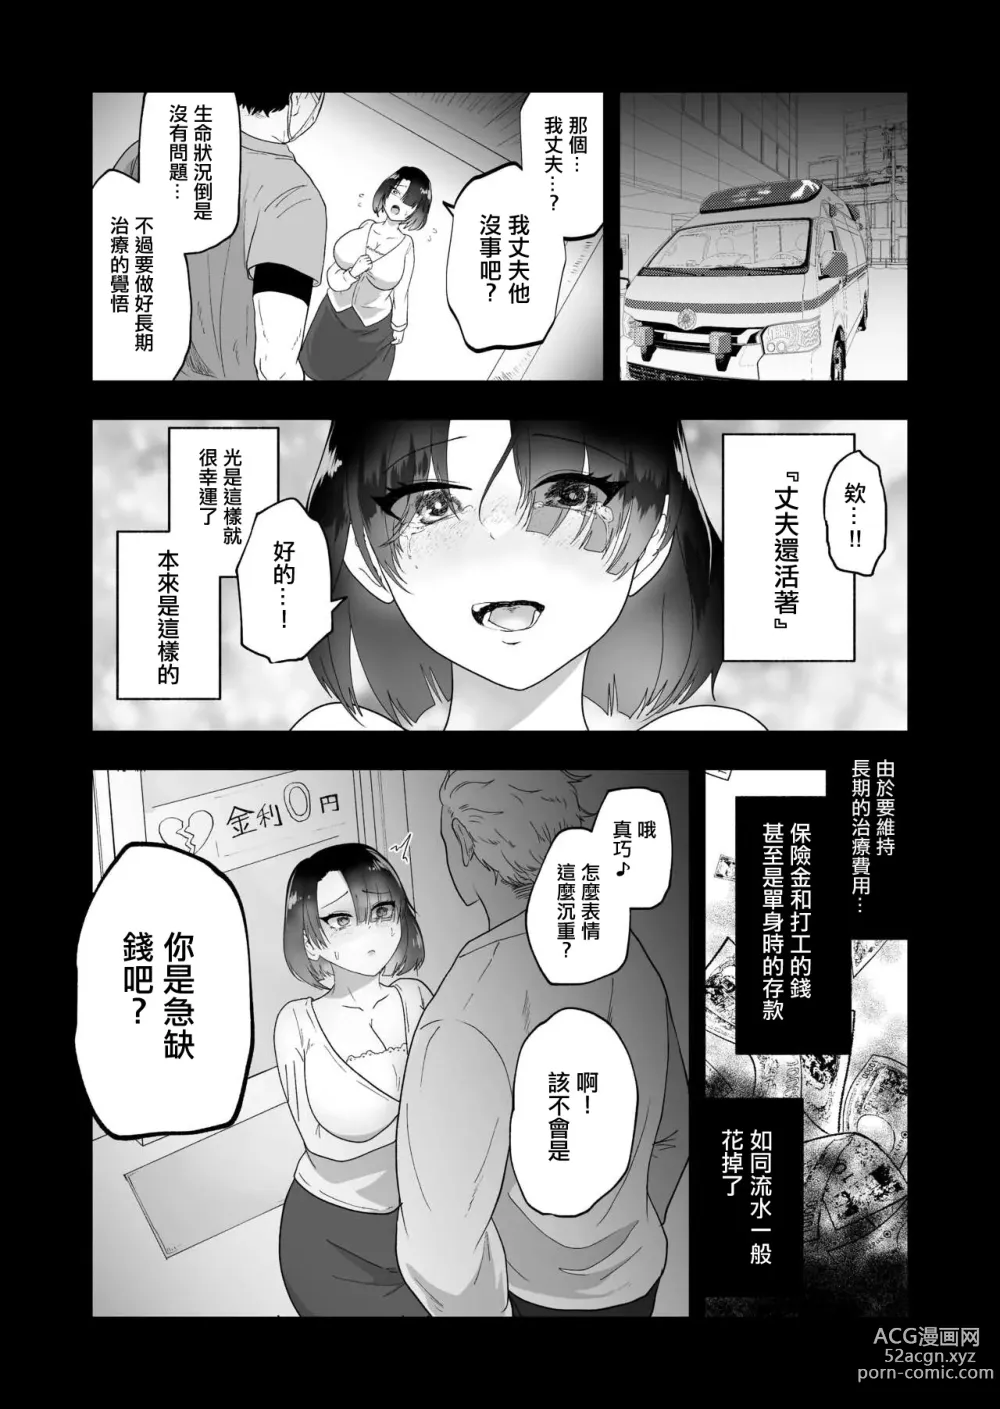 Page 6 of doujinshi 為了丈夫出賣身體的妻子堕落成母狗了